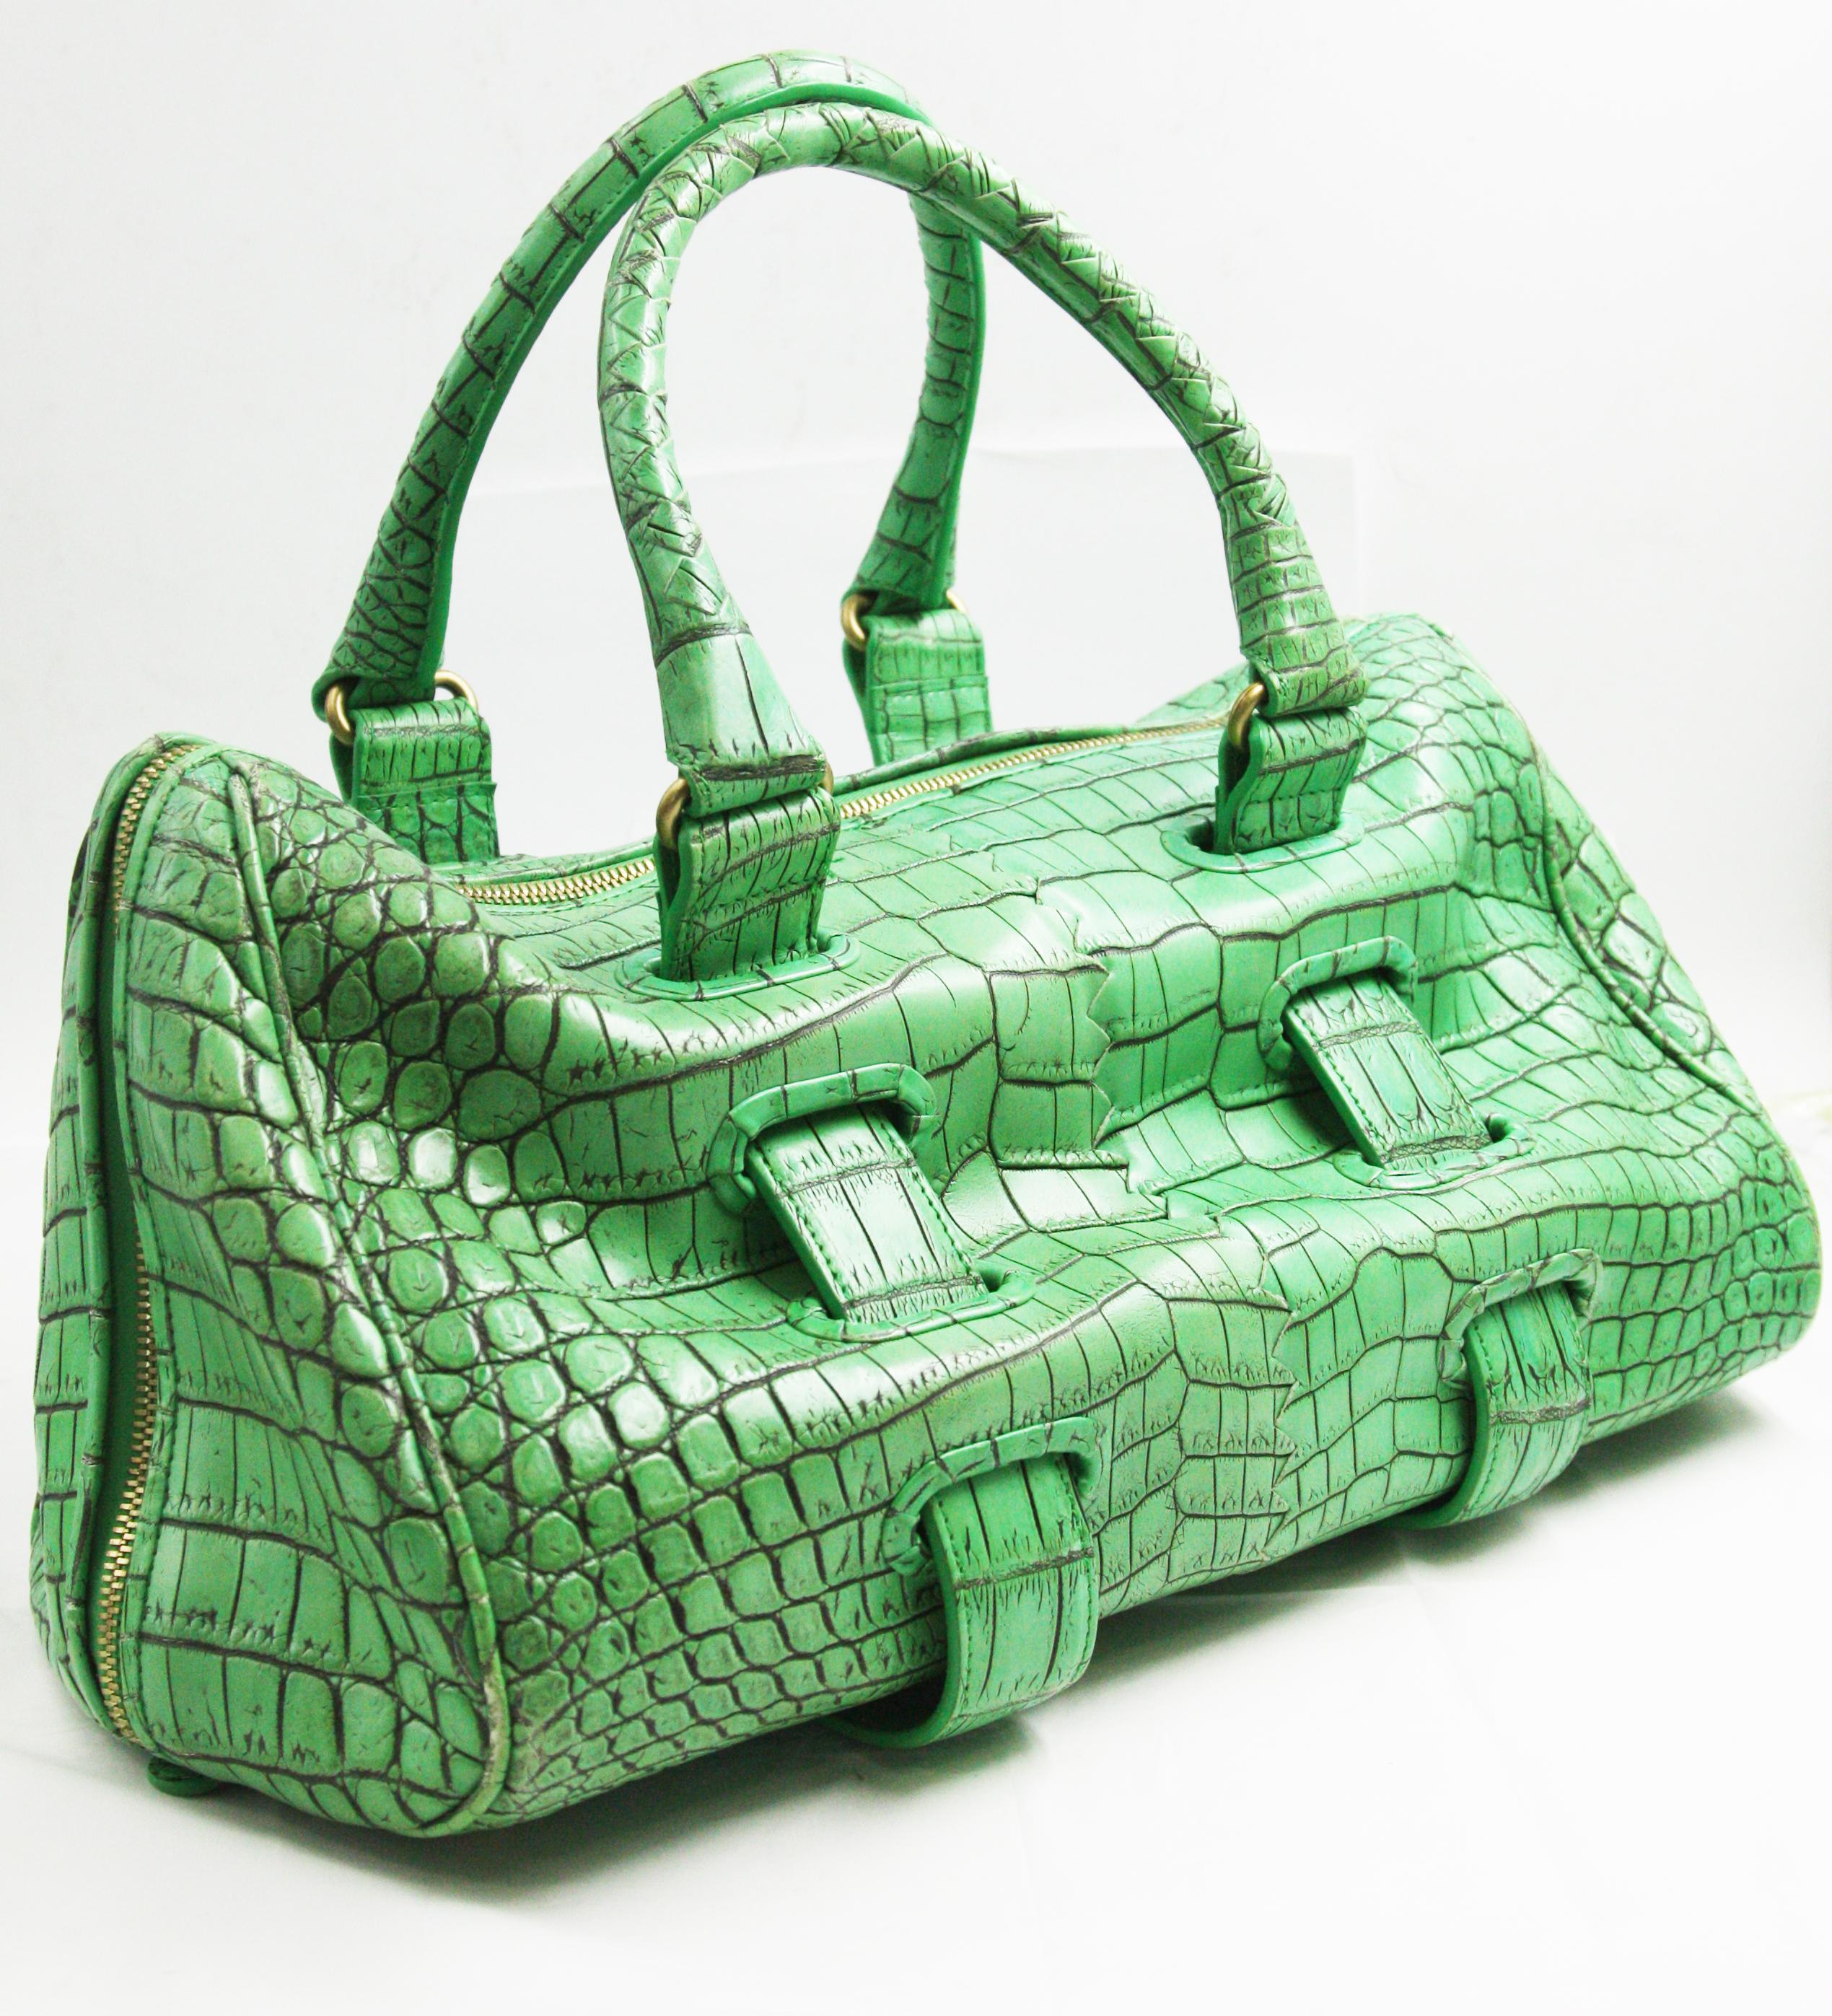 Bottega Veneta green Crocodile Skin tote

Includes: Dustbag. original mirror.

